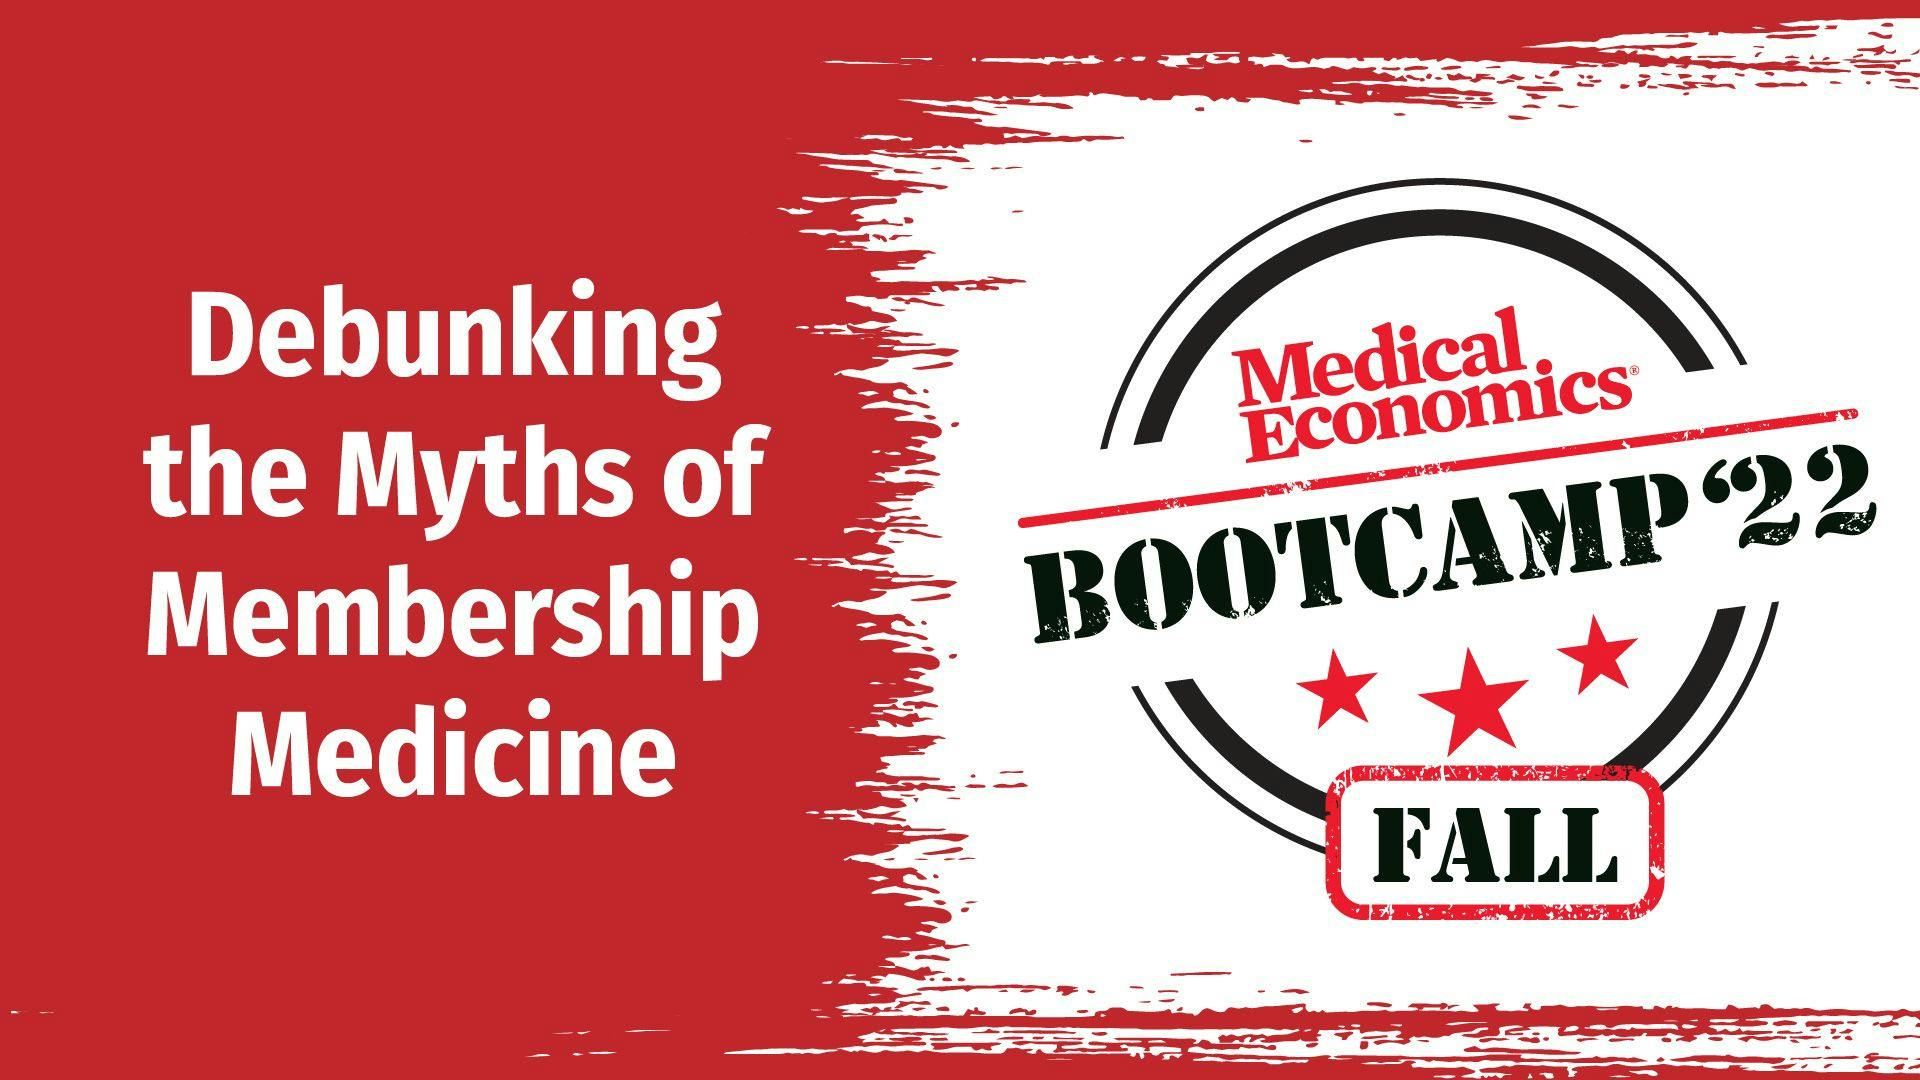 Debunking the myths of membership medicine